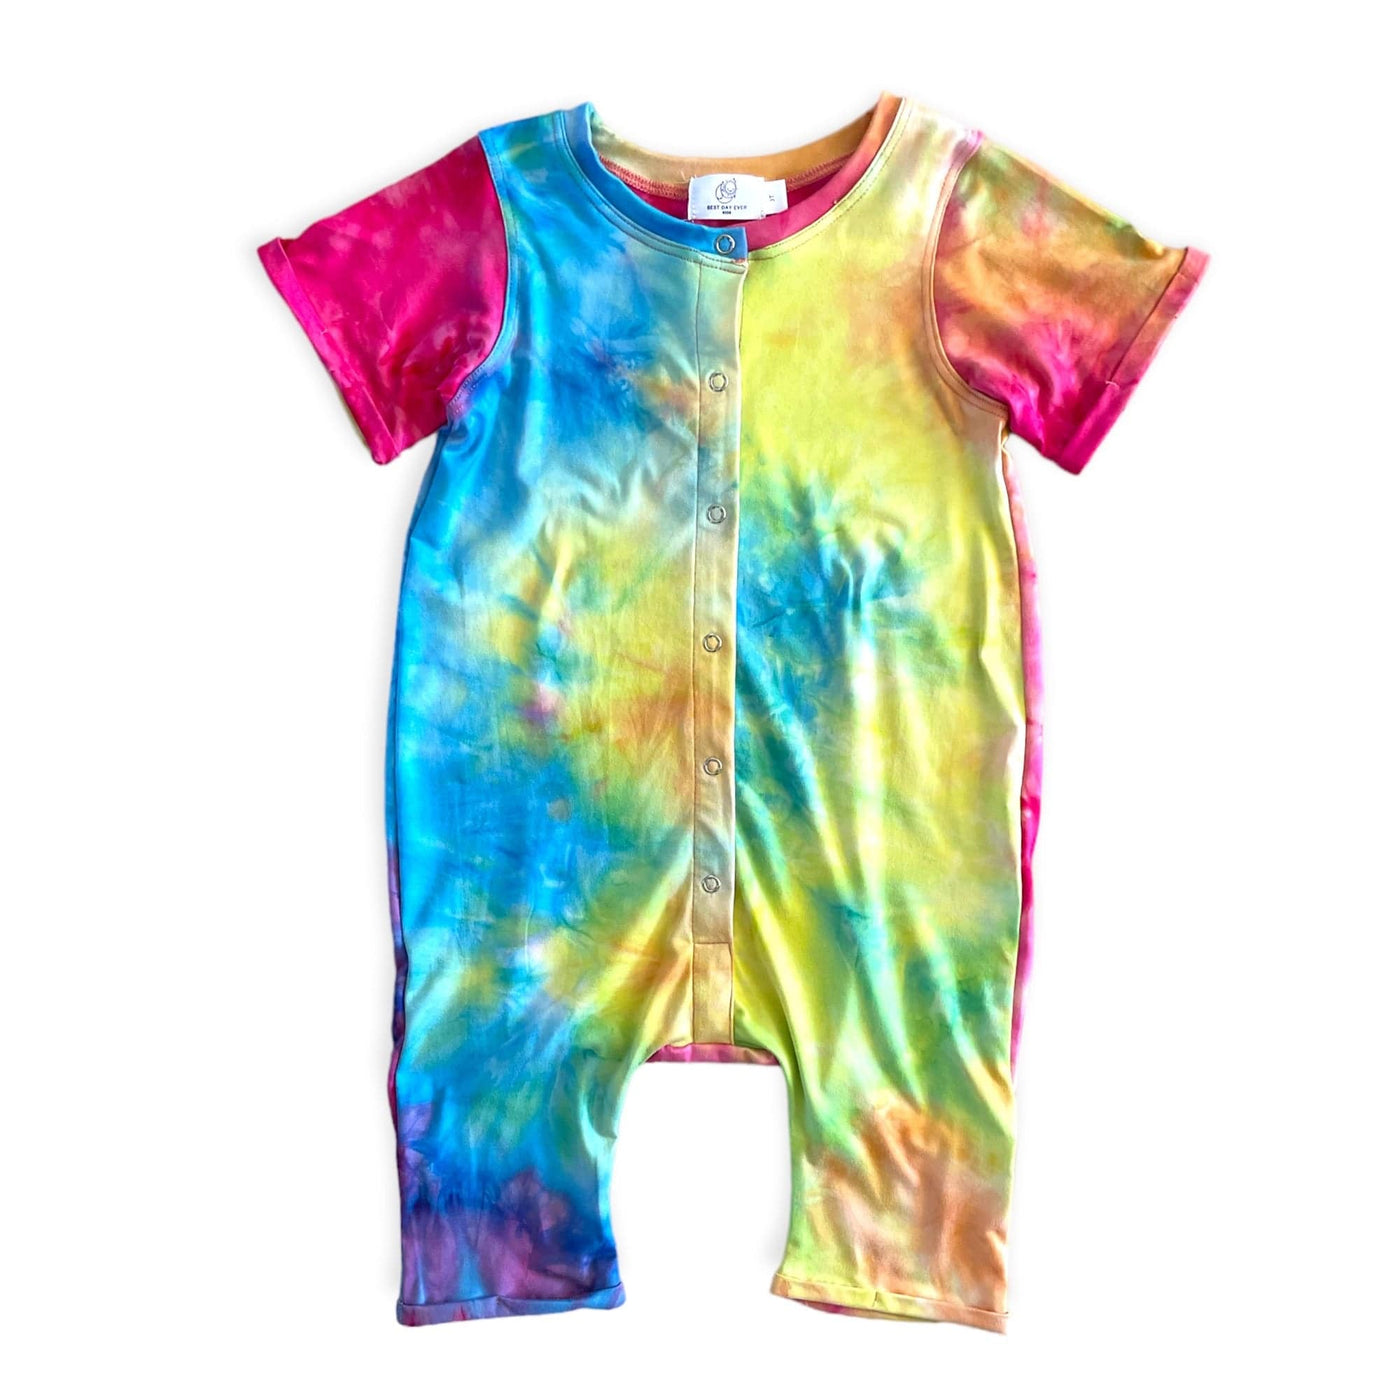 Best Day Ever Kids Baby & Toddler Dresses Fruit Loop Tie Dye Harem Romper buy online boutique kids clothing